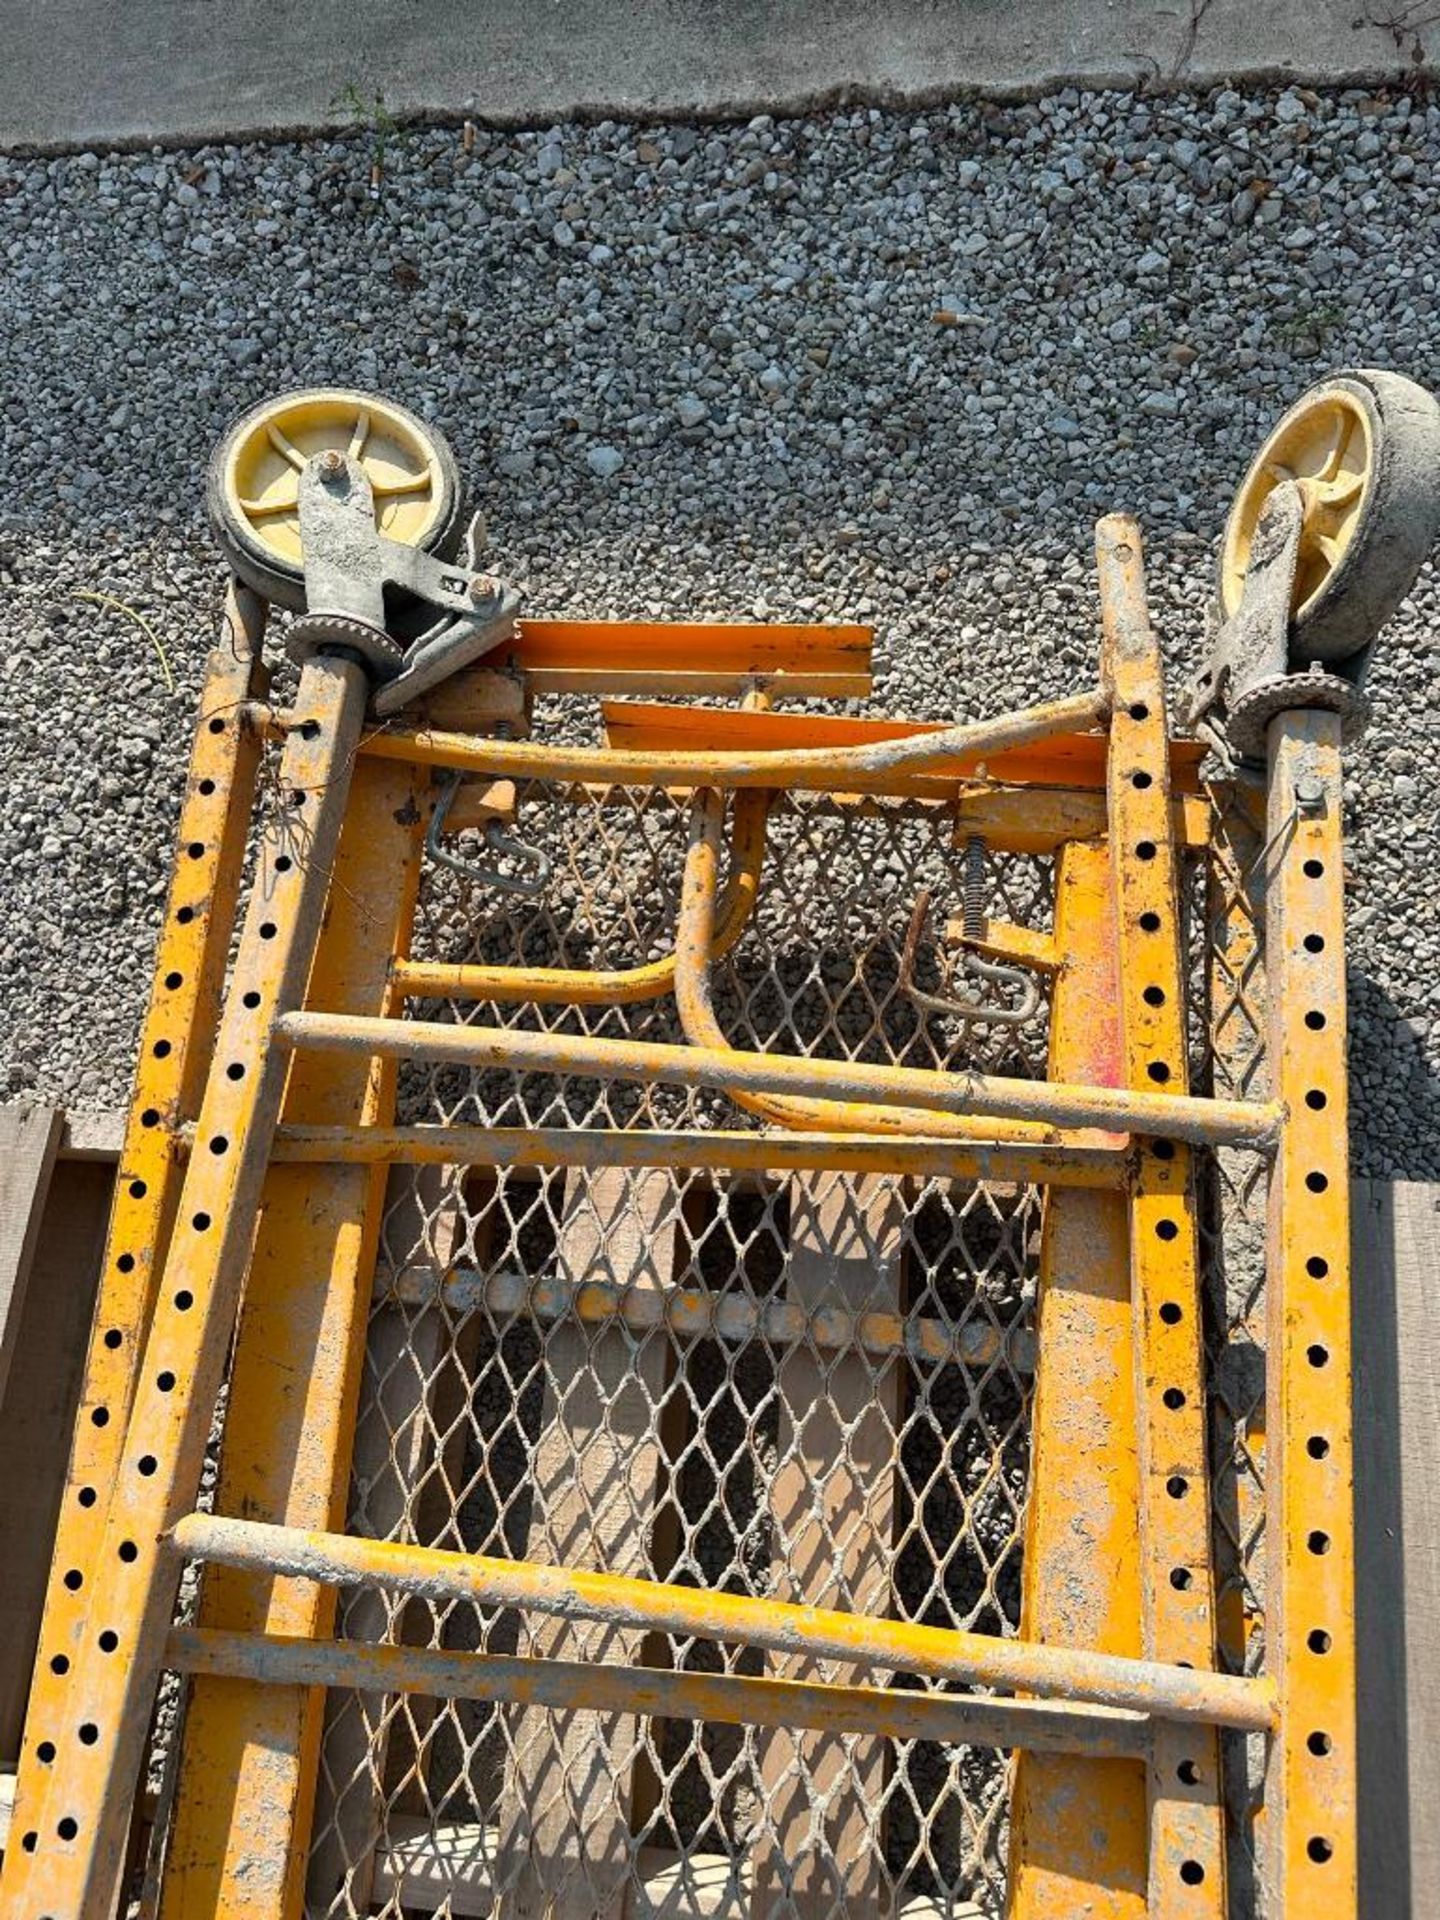 Bil-Jax 6' steel rolling scaffolding, located in Mt. Pleasant, IA. - Image 3 of 4